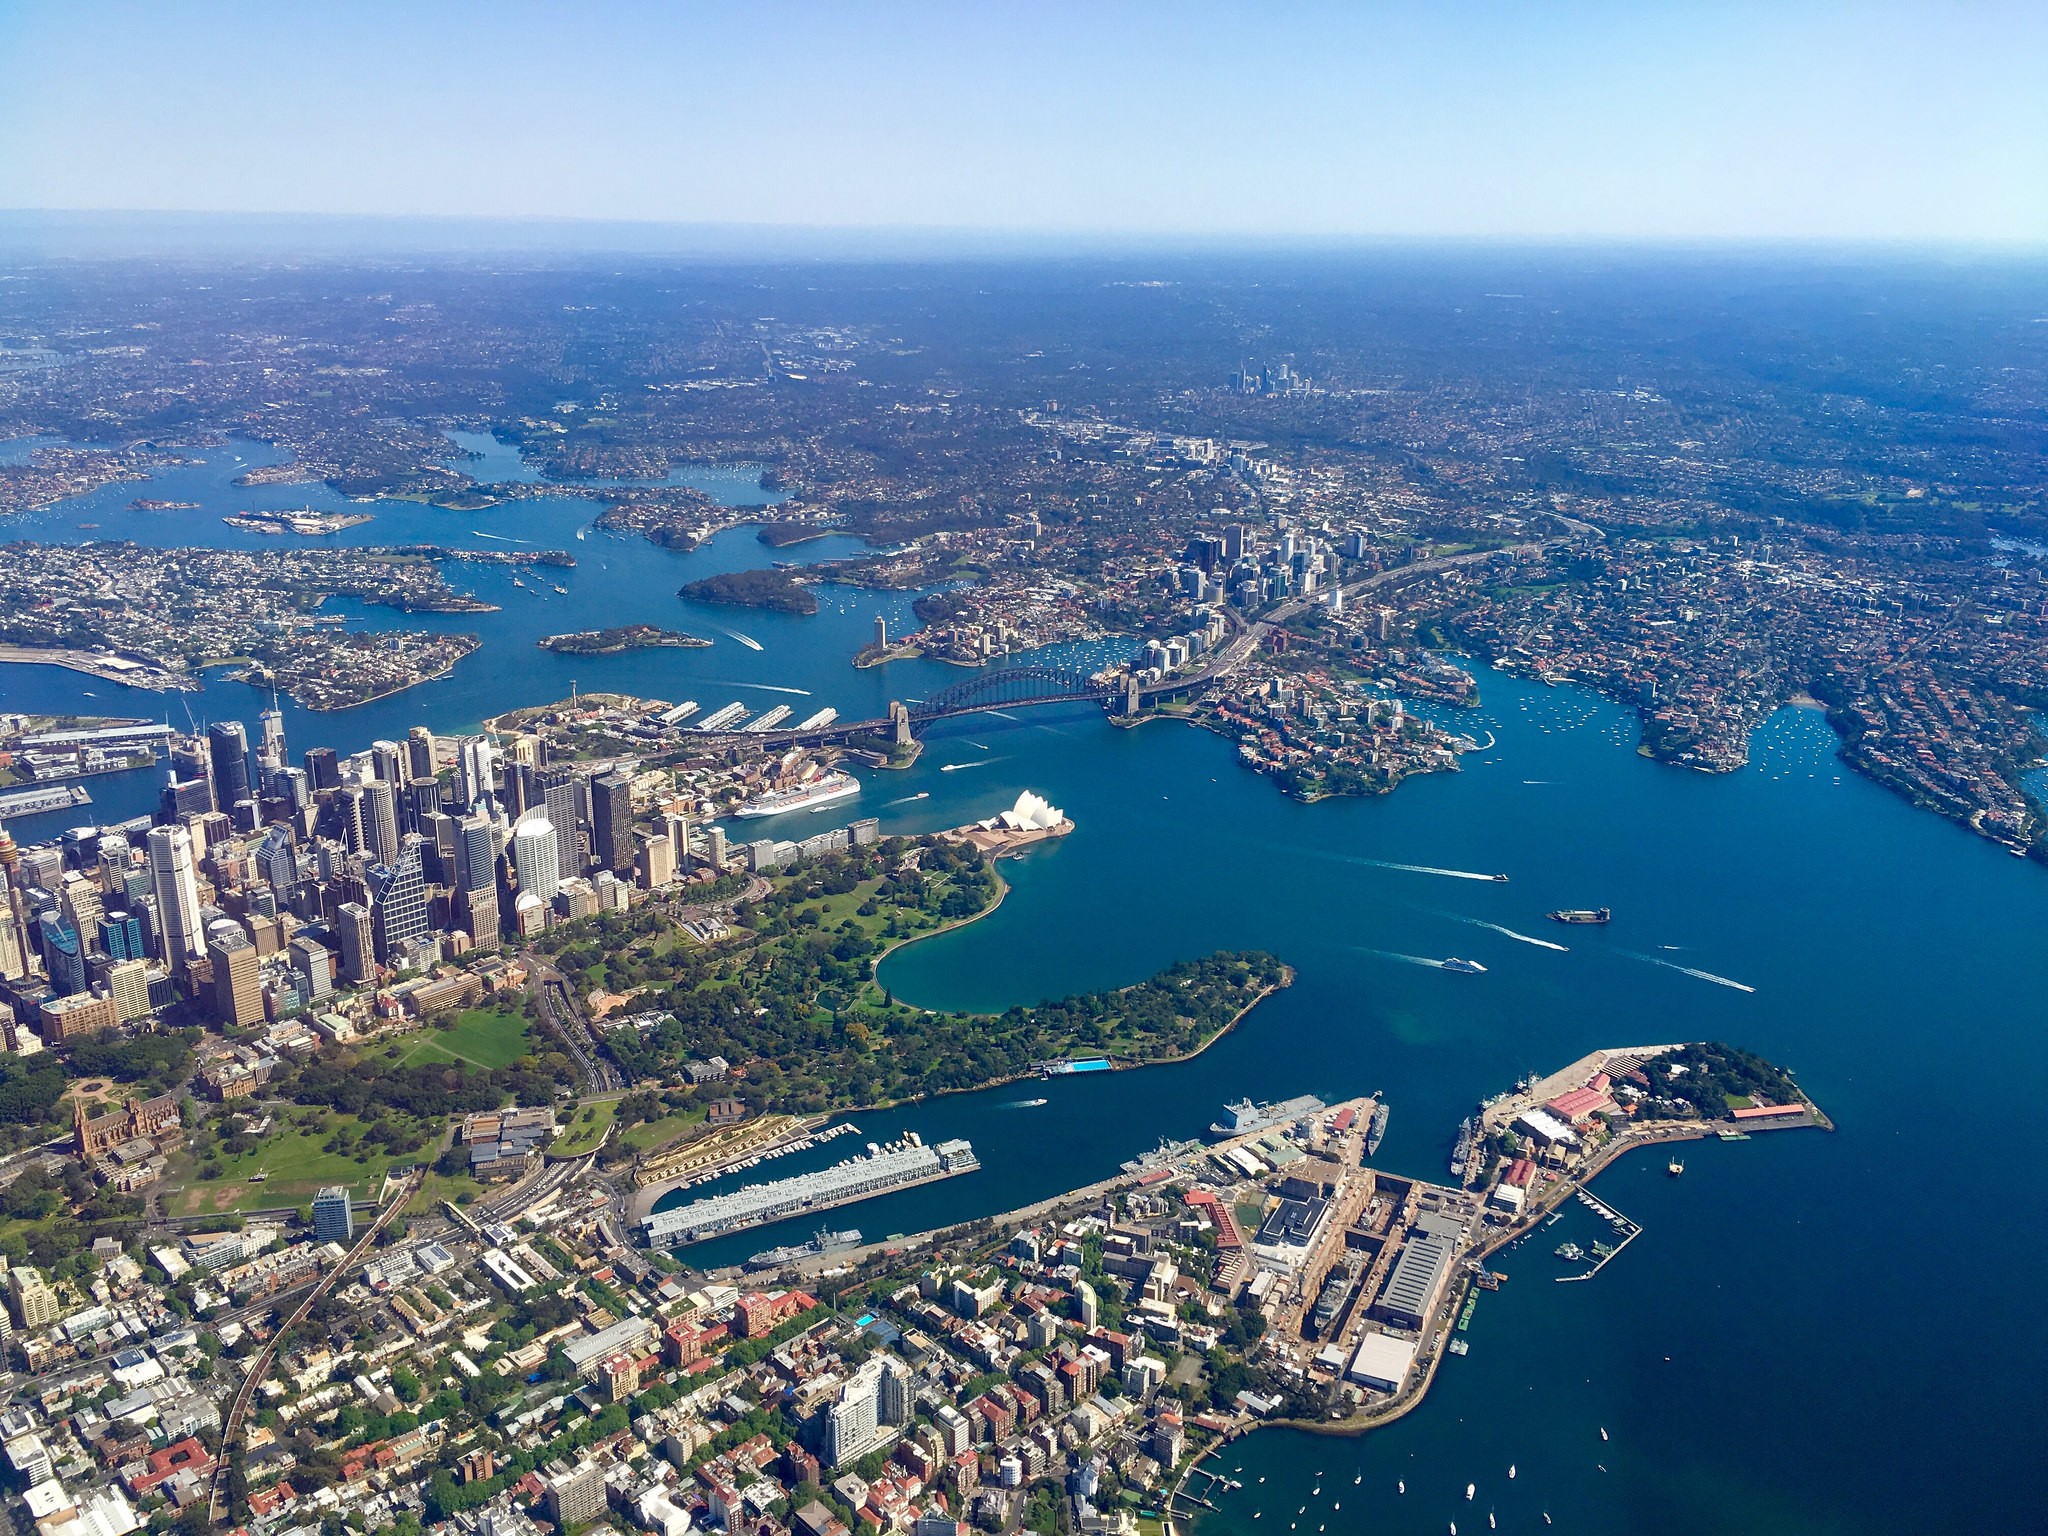 General 2048x1536 Australia Sydney aerial view city cityscape sea